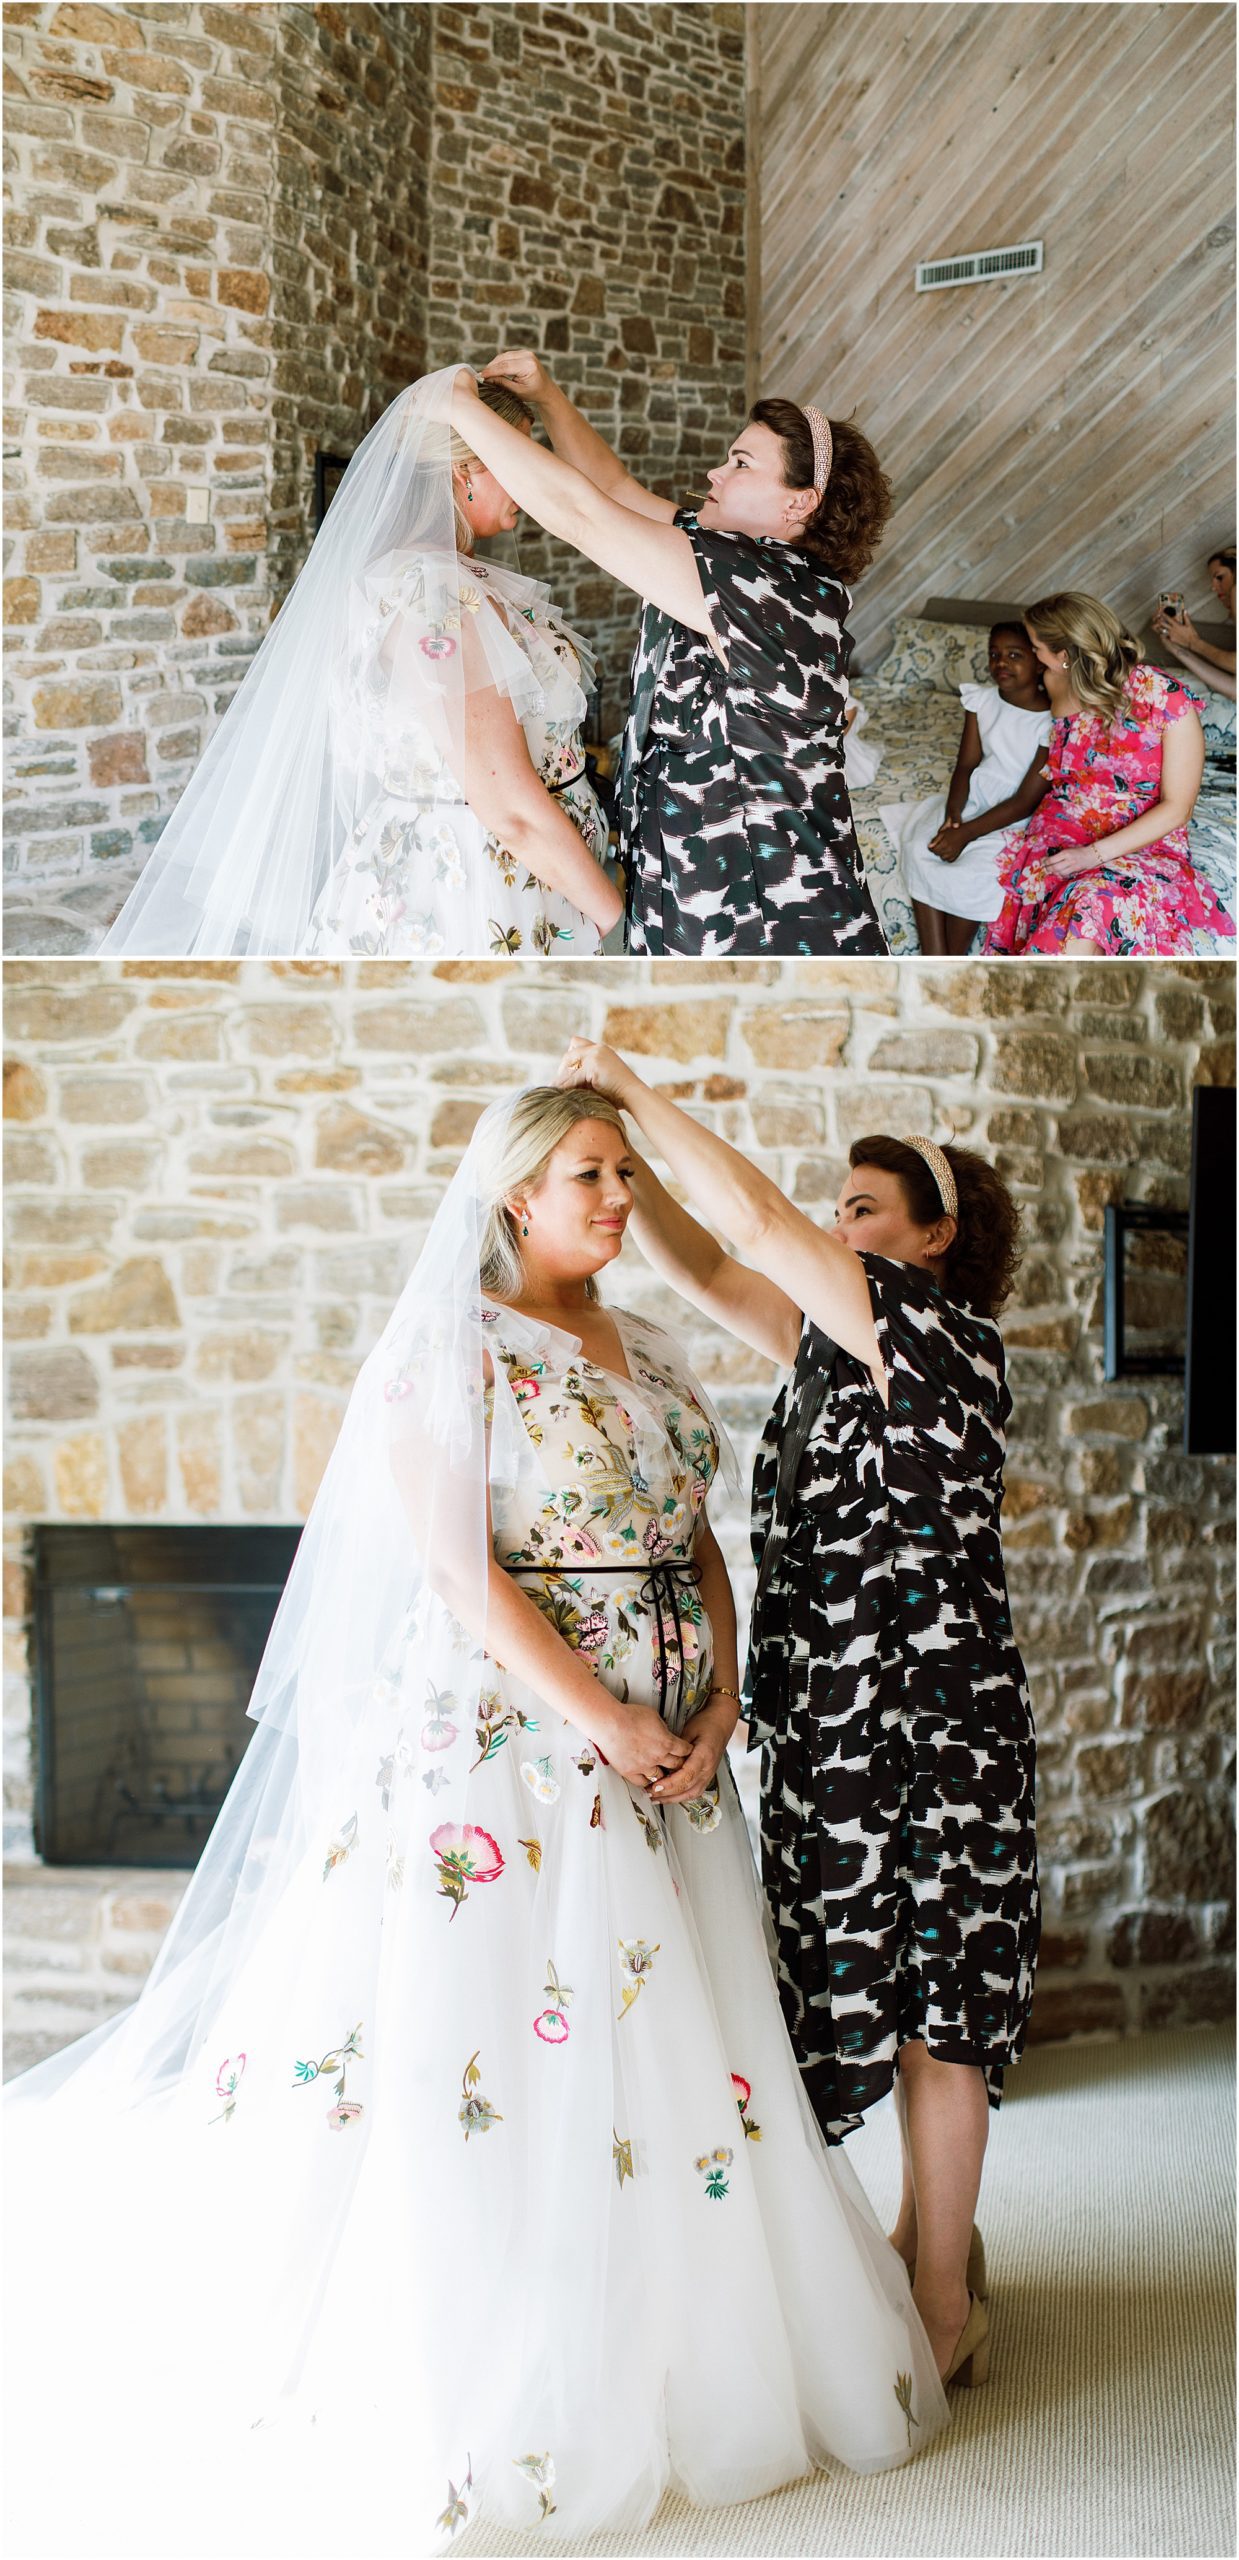 Owner of Warren Barron Bridal shop in Dallas, Texas helps bride into her Monique Lhuillier veil